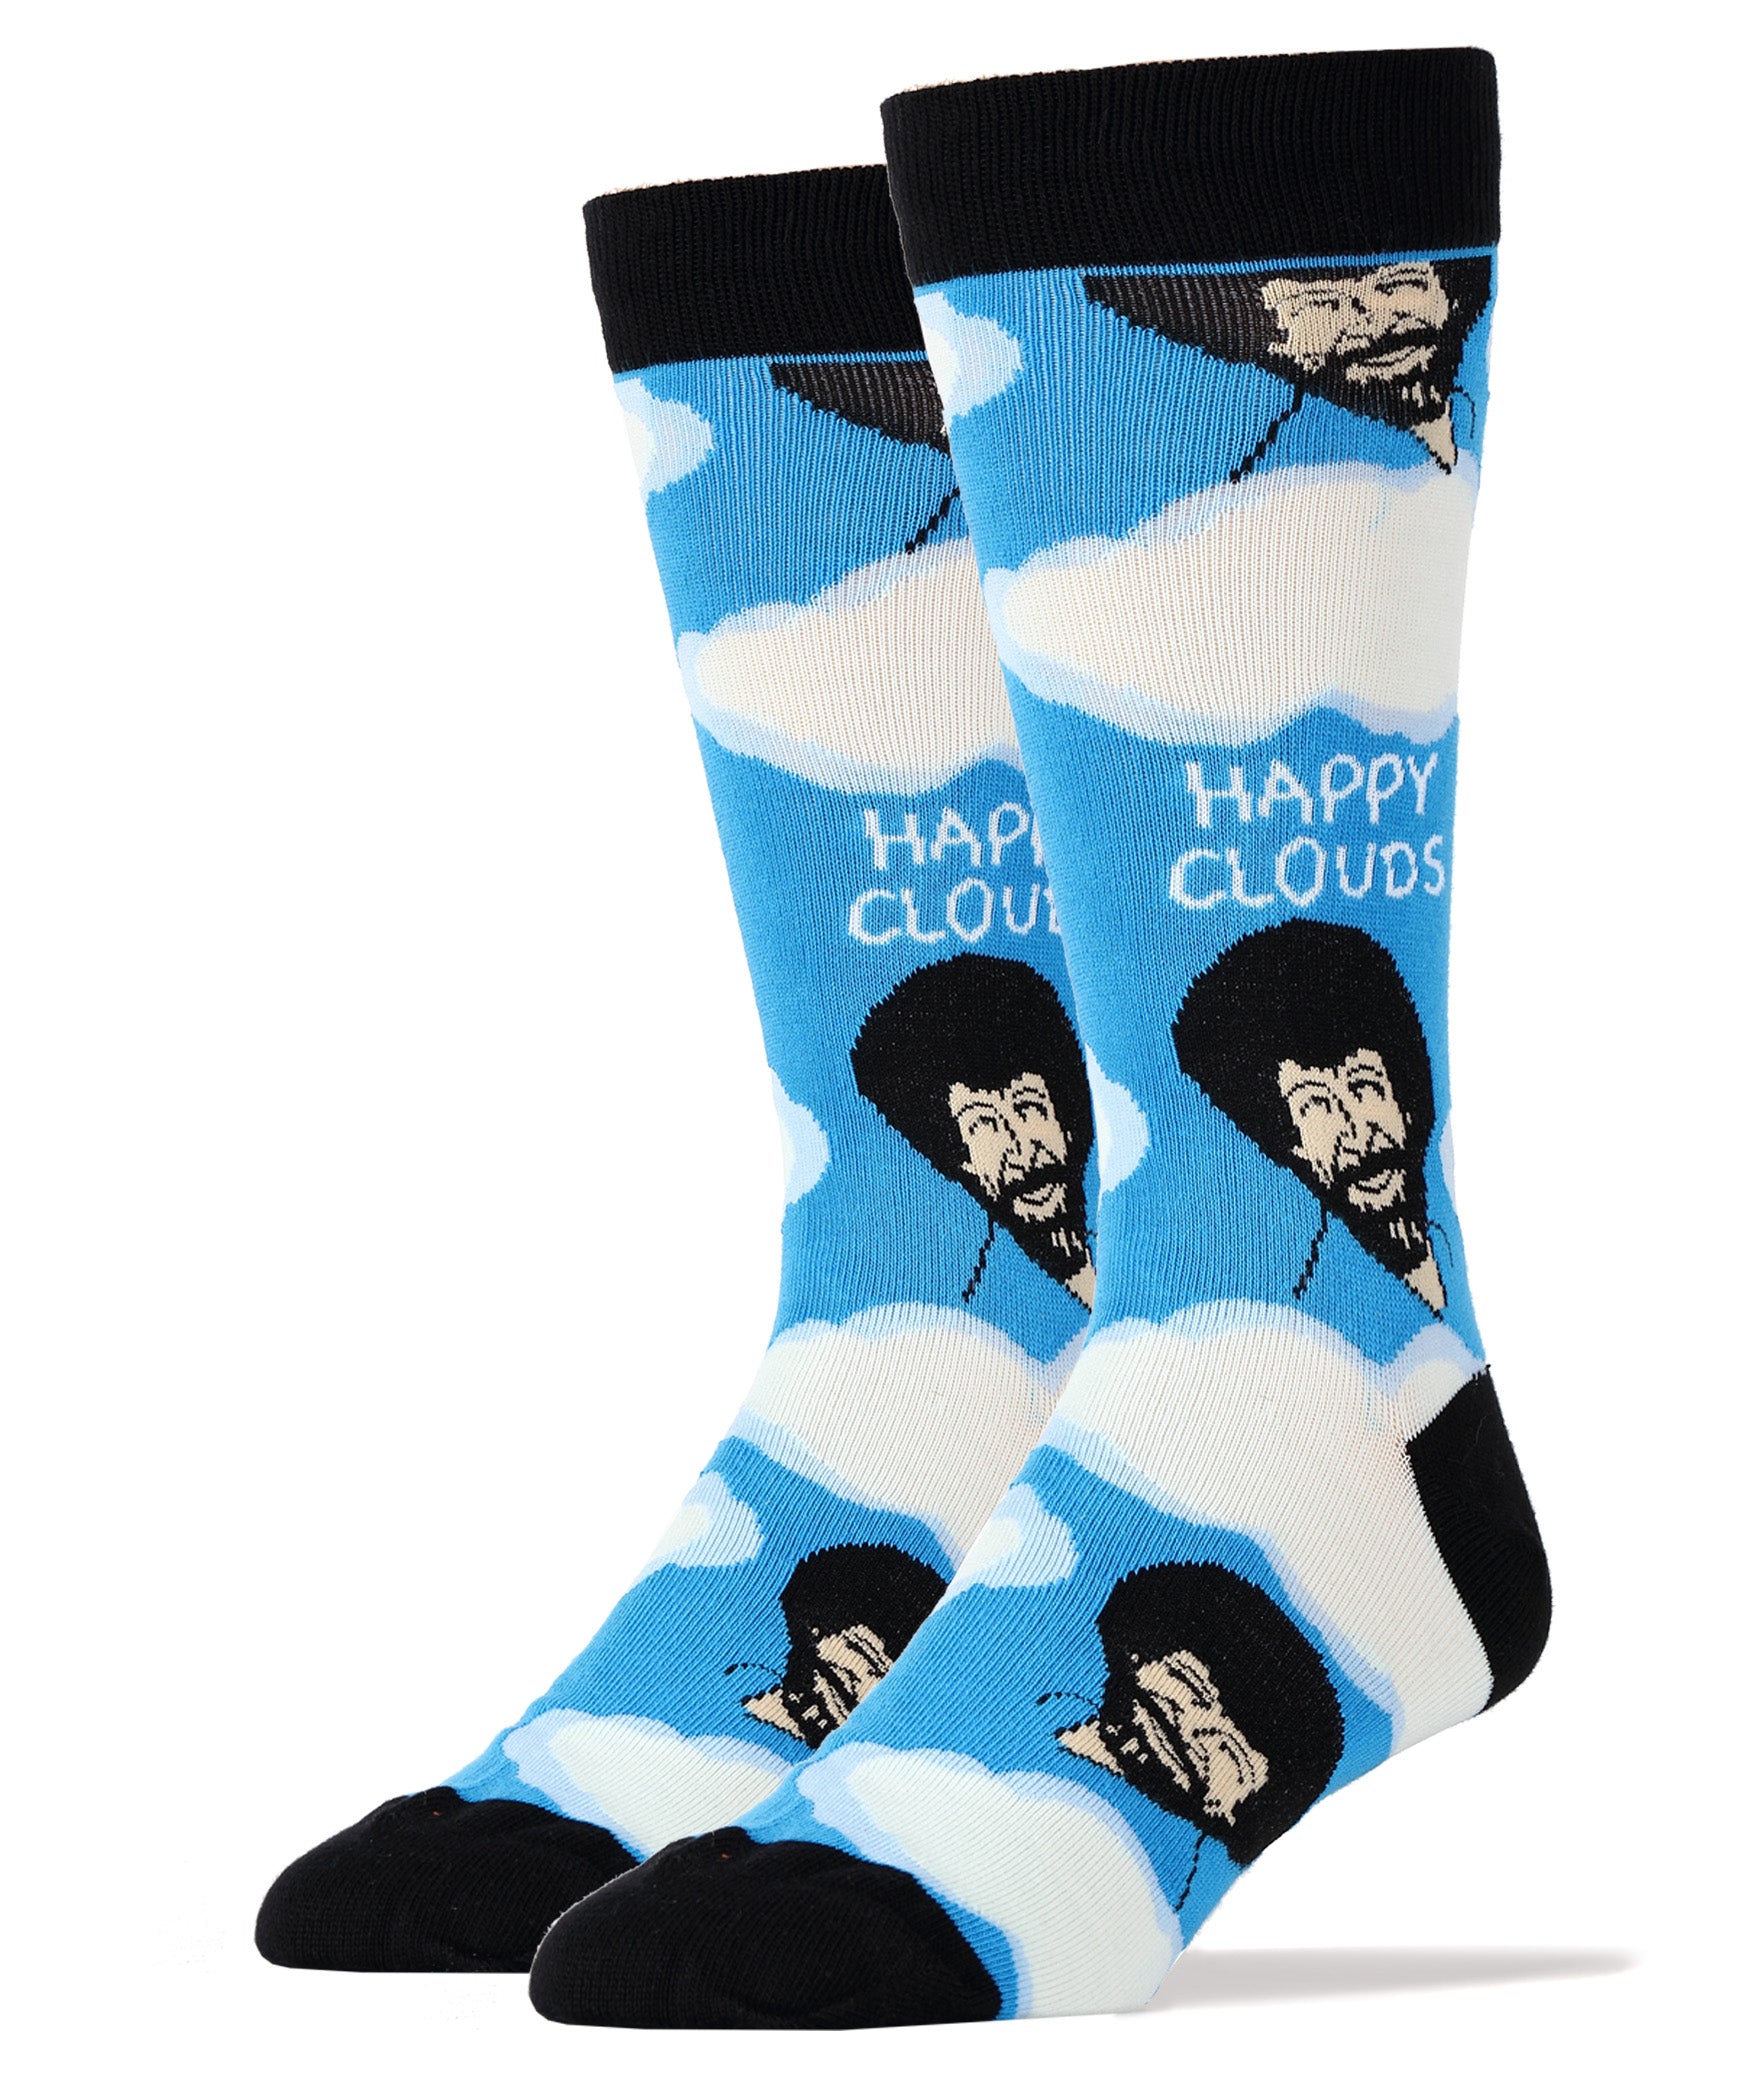 Happy Clouds Socks | Bob Ross Crew Socks For Men